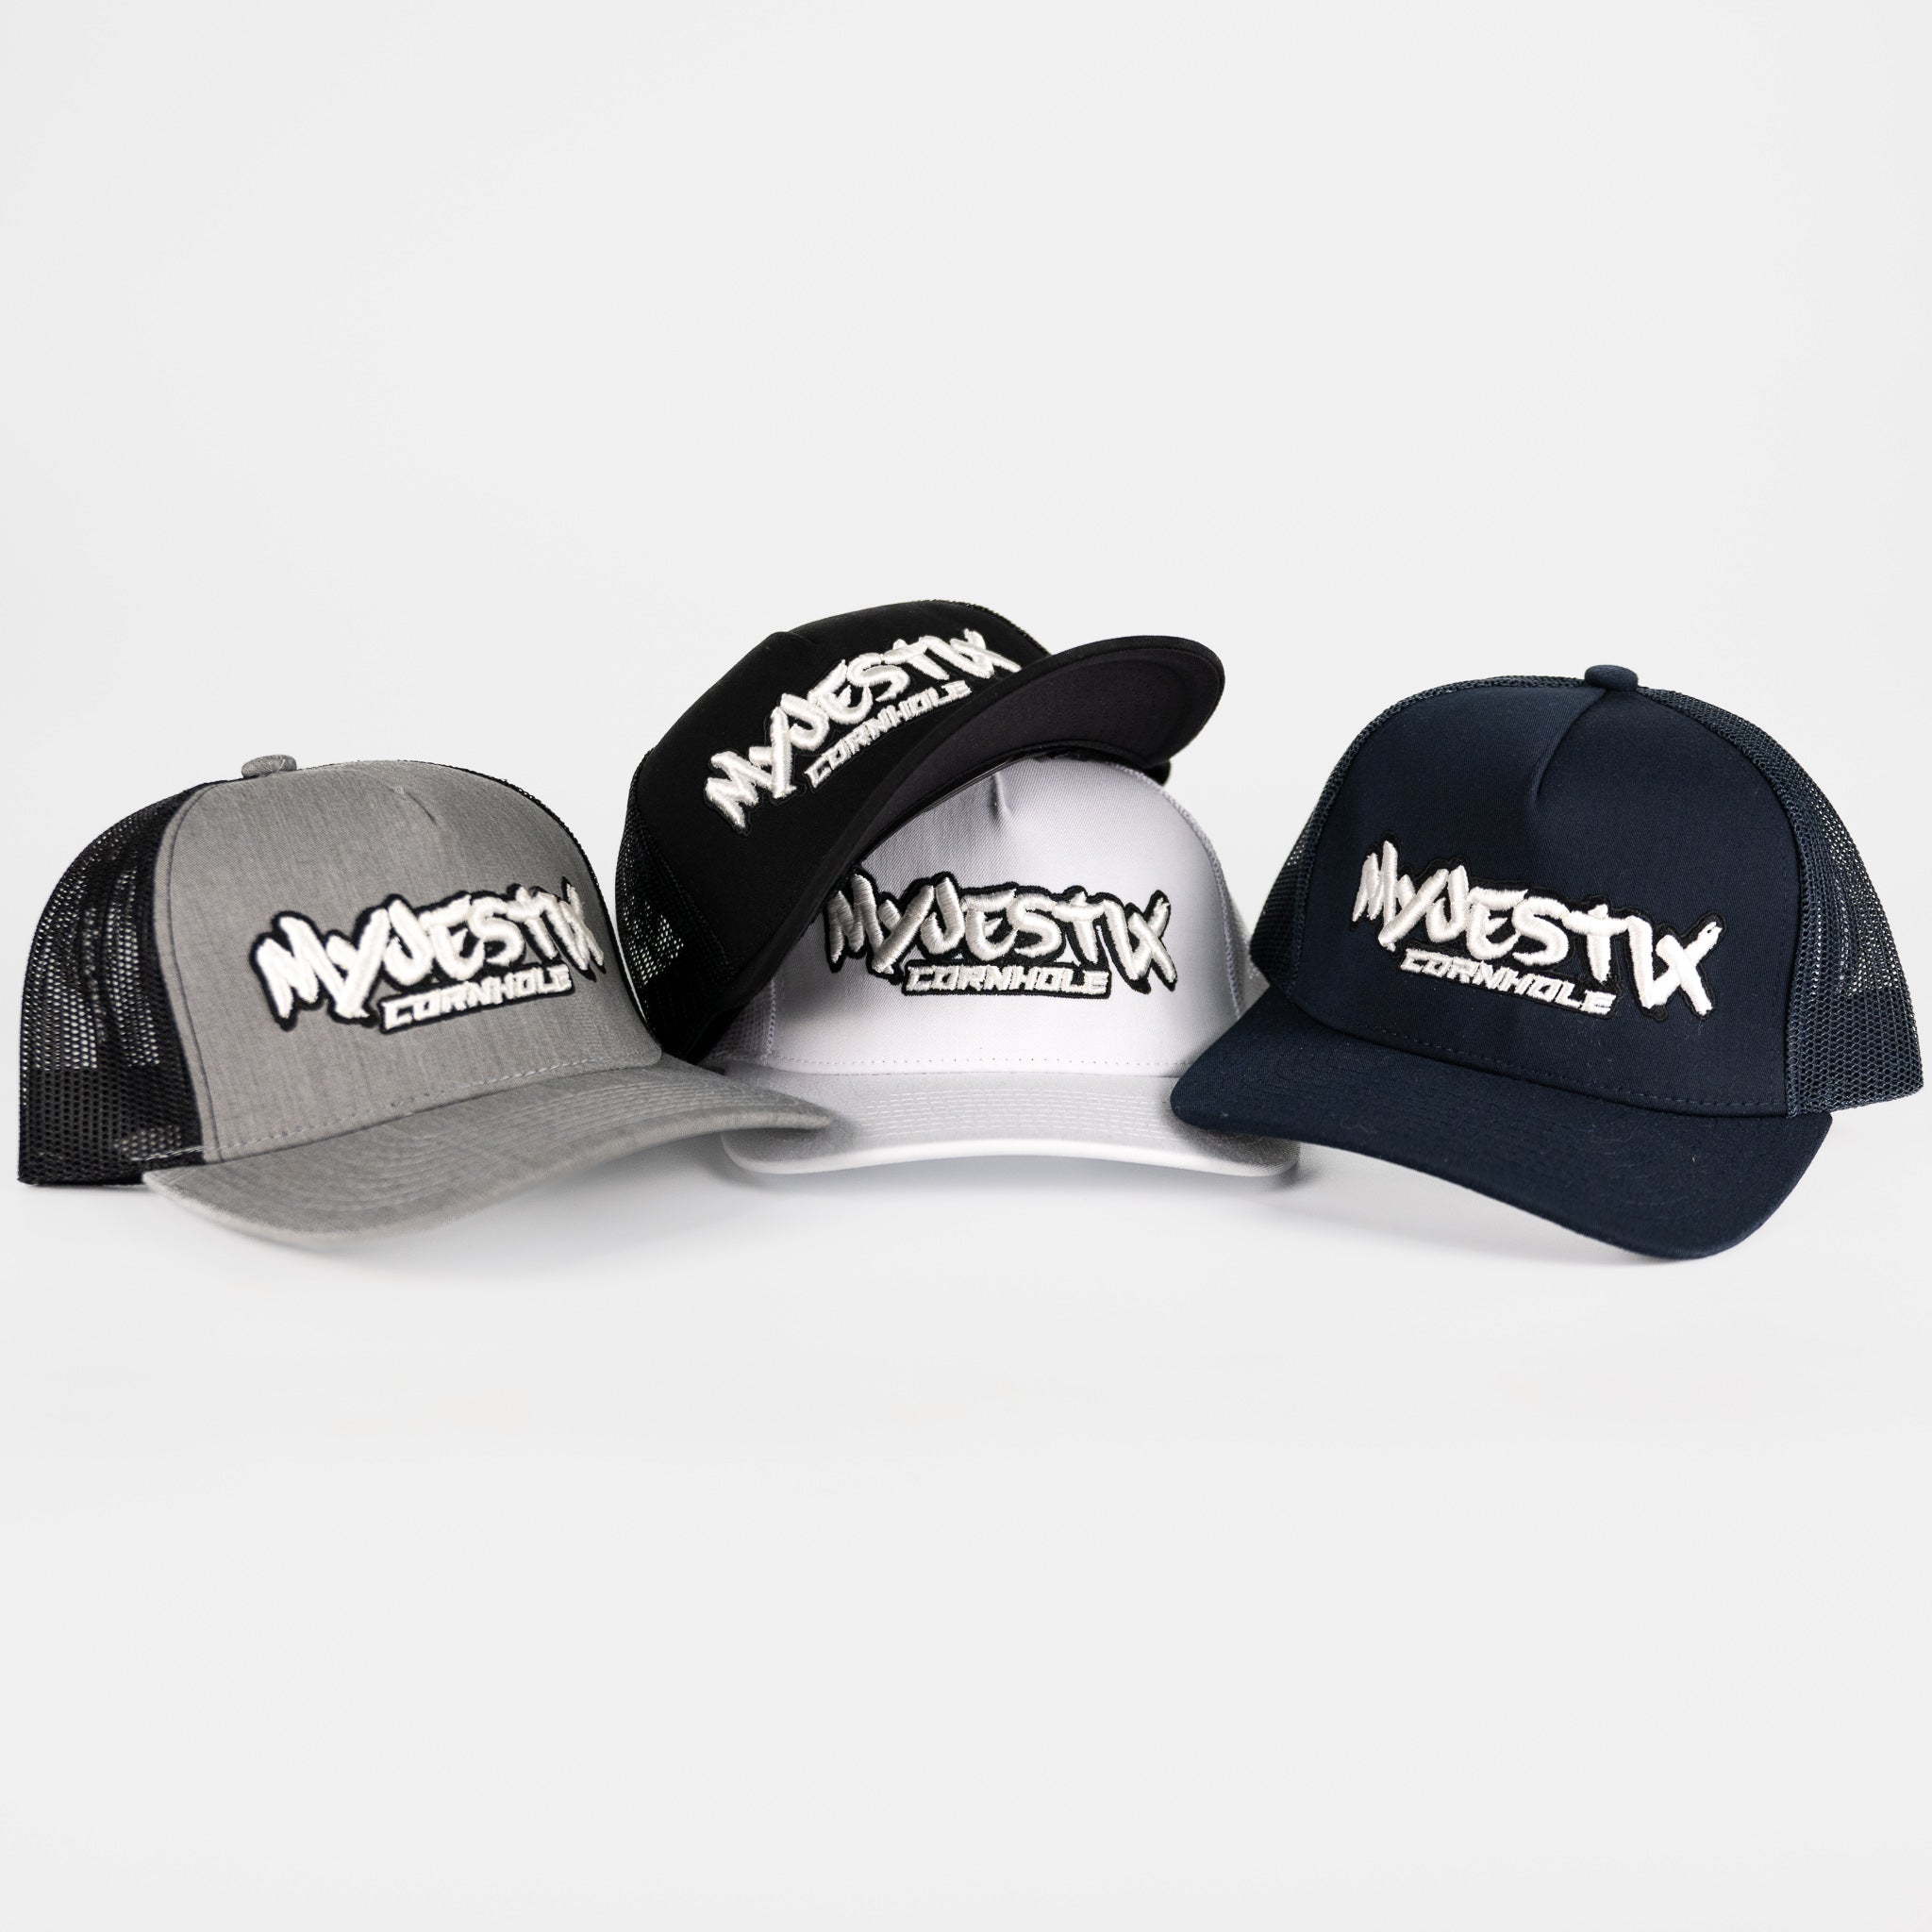 Myjestix Hats